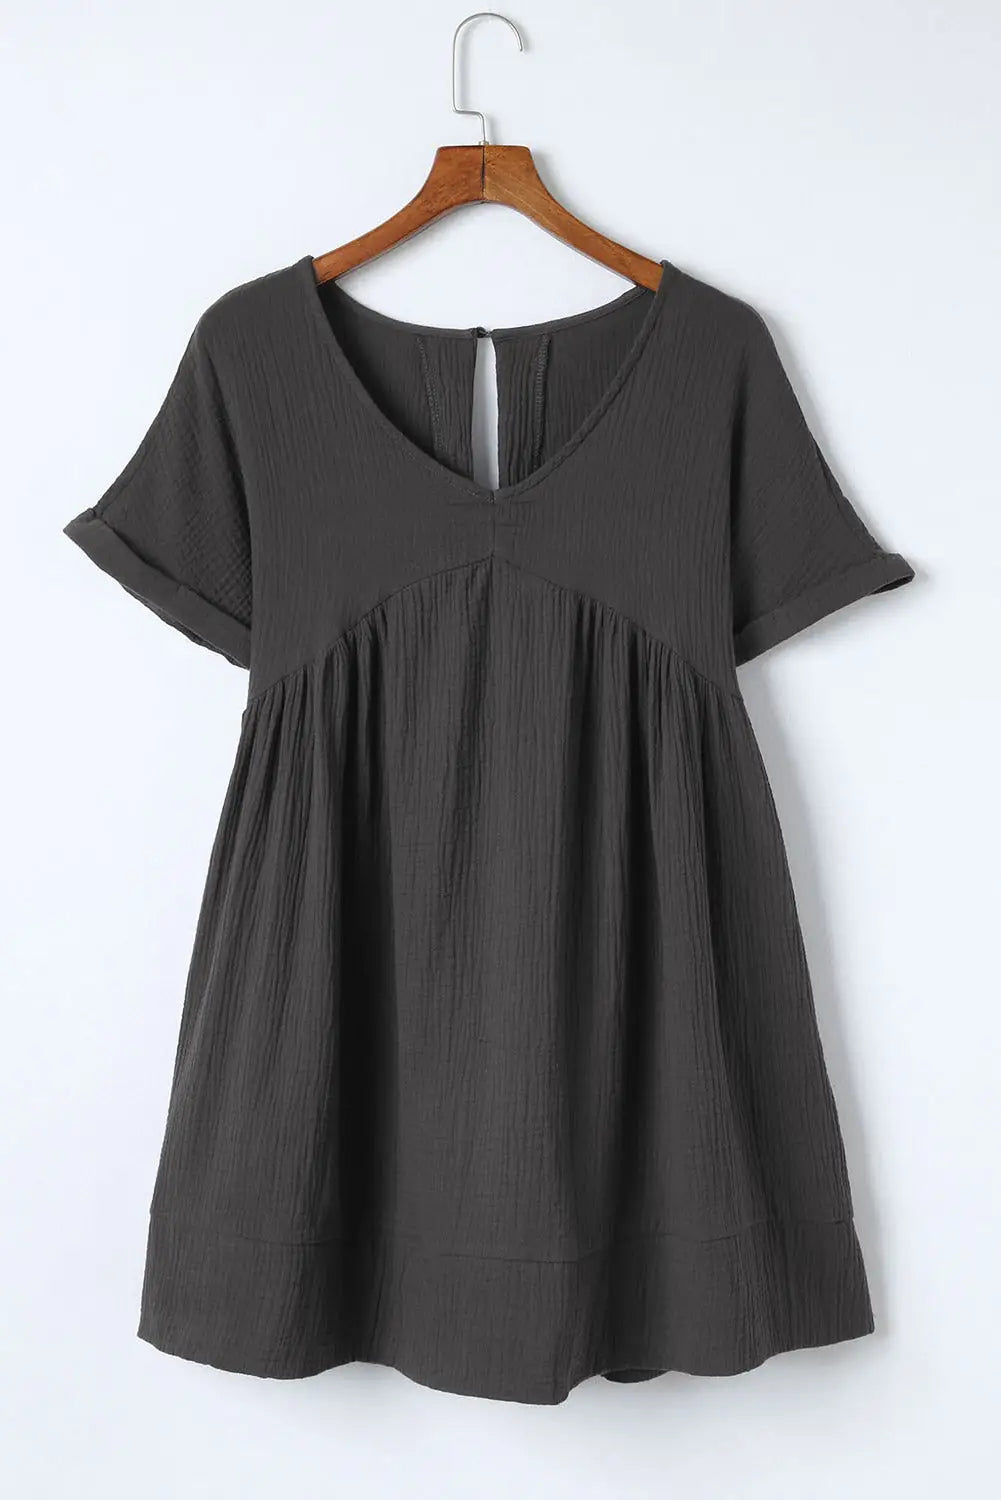 Gray roll up short sleeve v neck babydoll mini dress - dresses